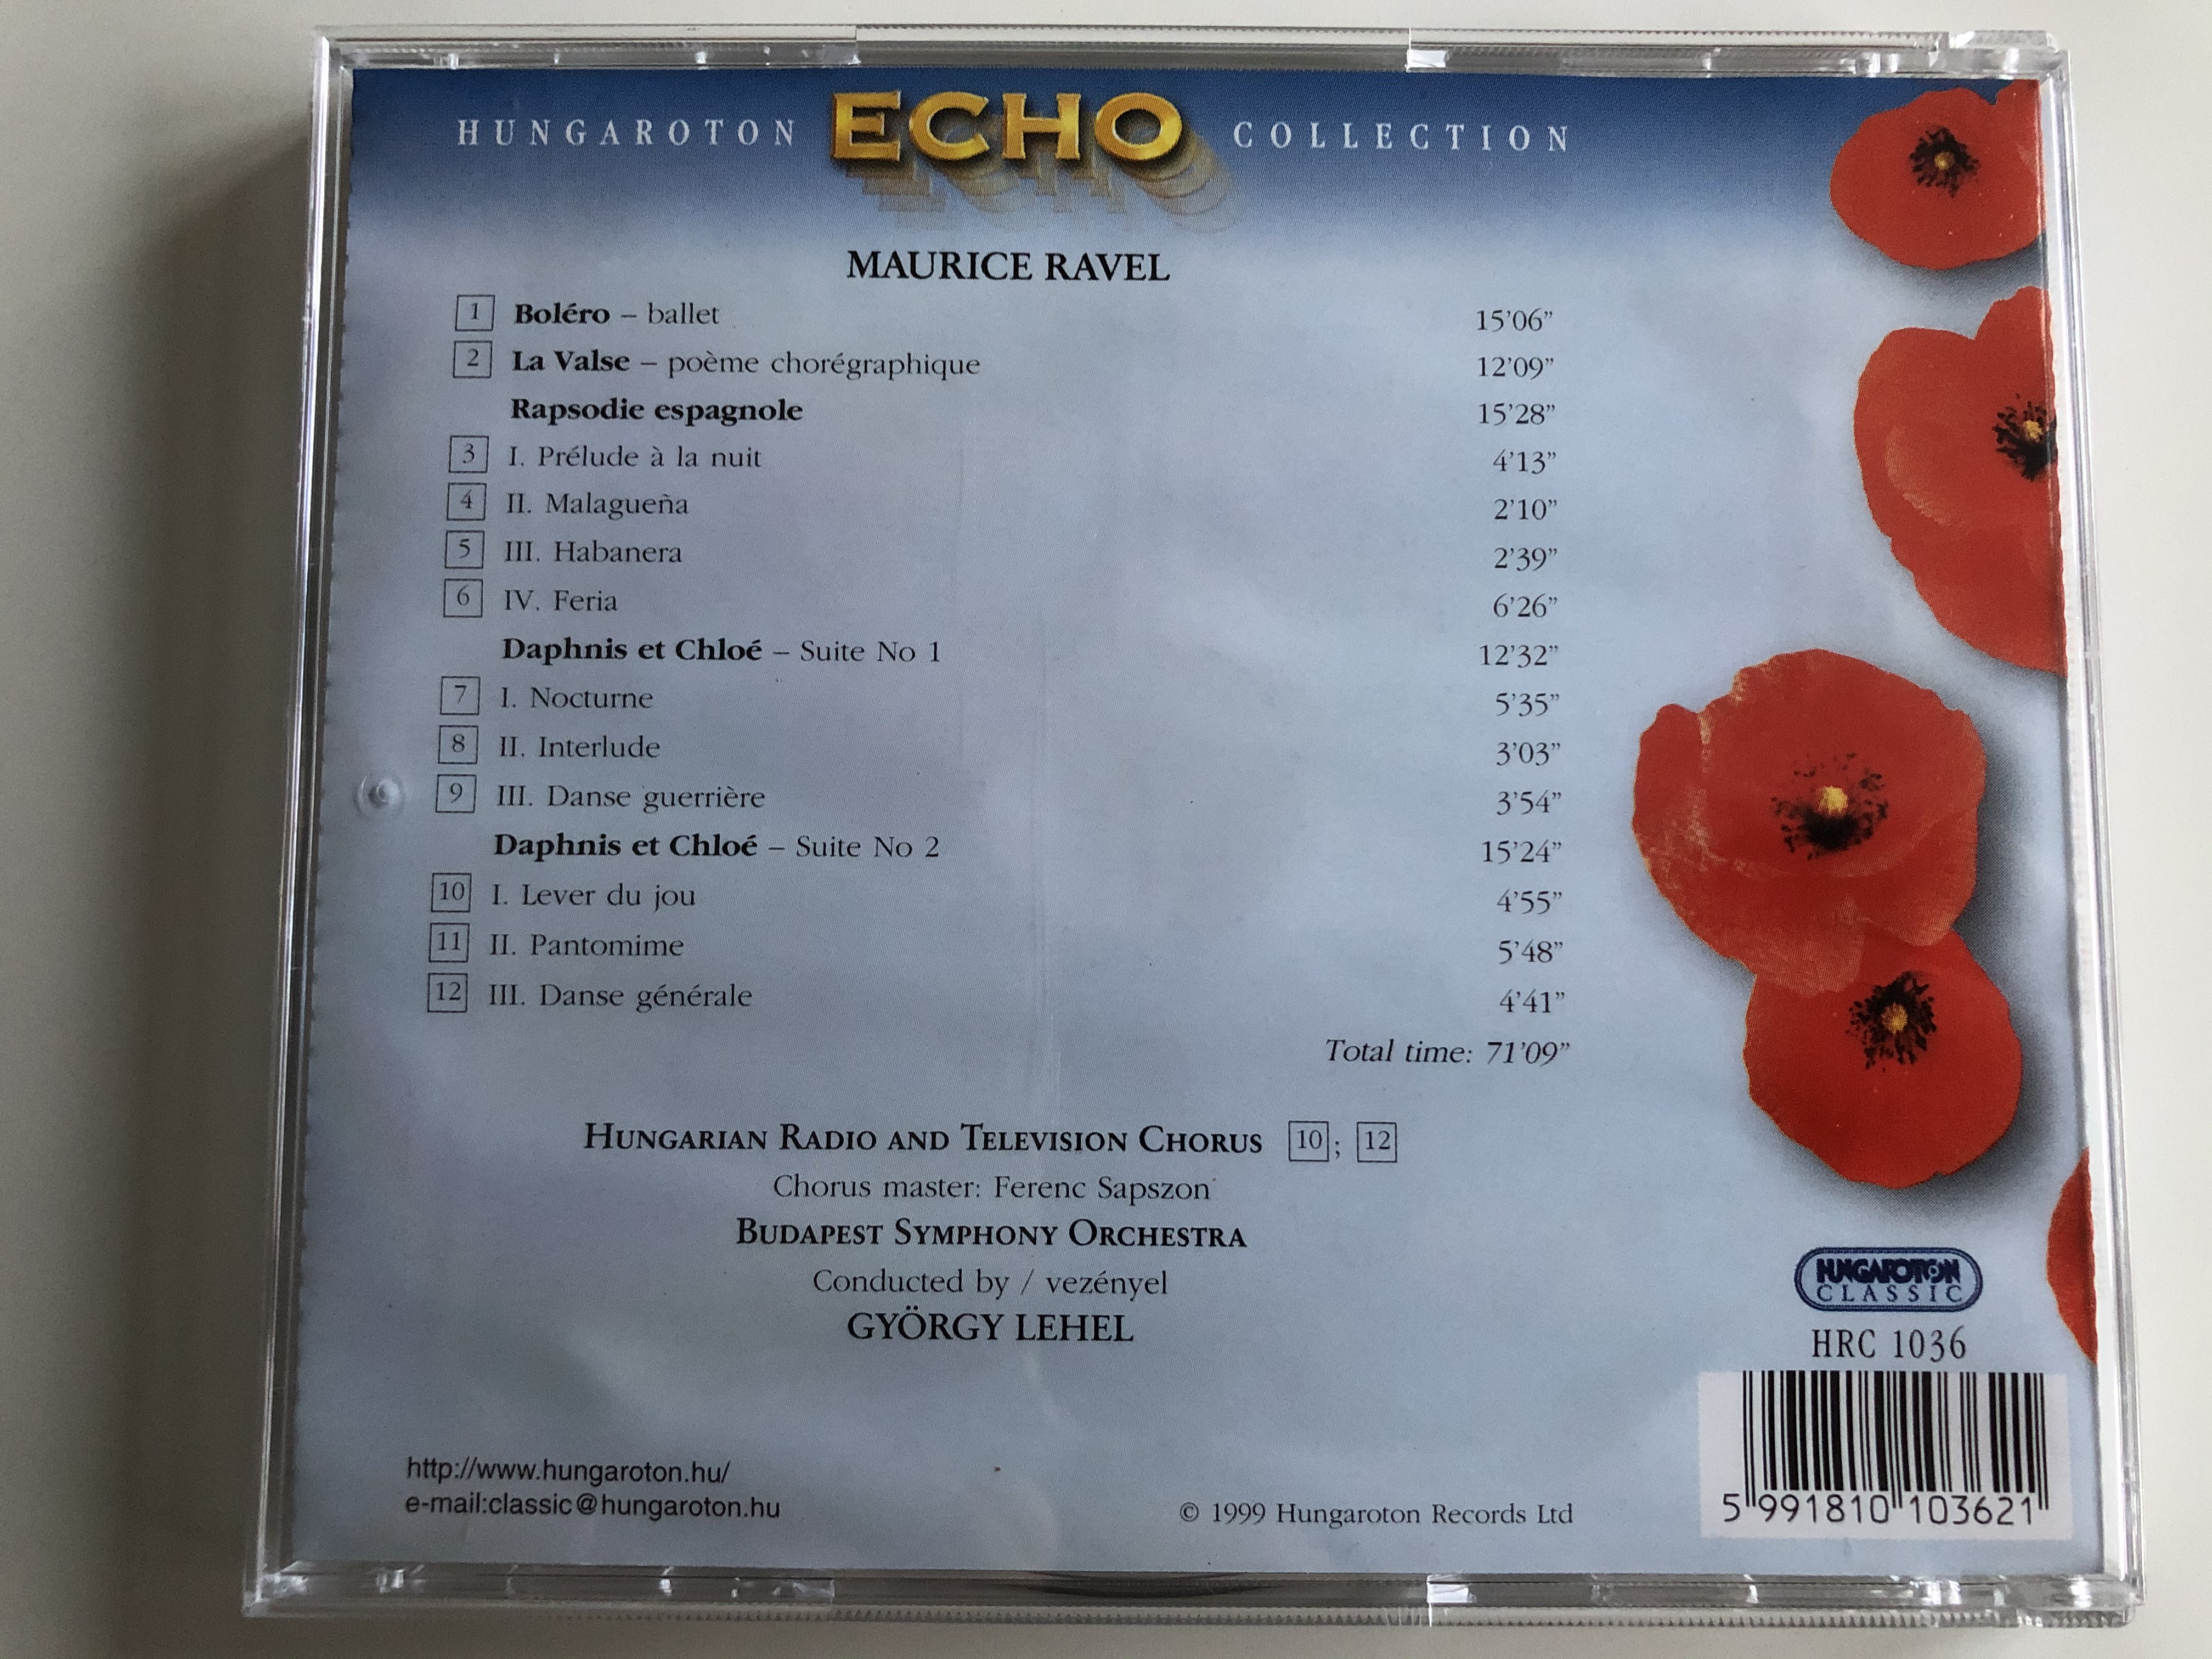 ravel-bolero-la-valse-rapsodie-espagnole-dephnis-et-chlo-suites-budapest-symphony-orchestra-gy-rgy-lehel-hungaroton-classic-audio-cd-1999-stereo-hrc-1036-4-.jpg